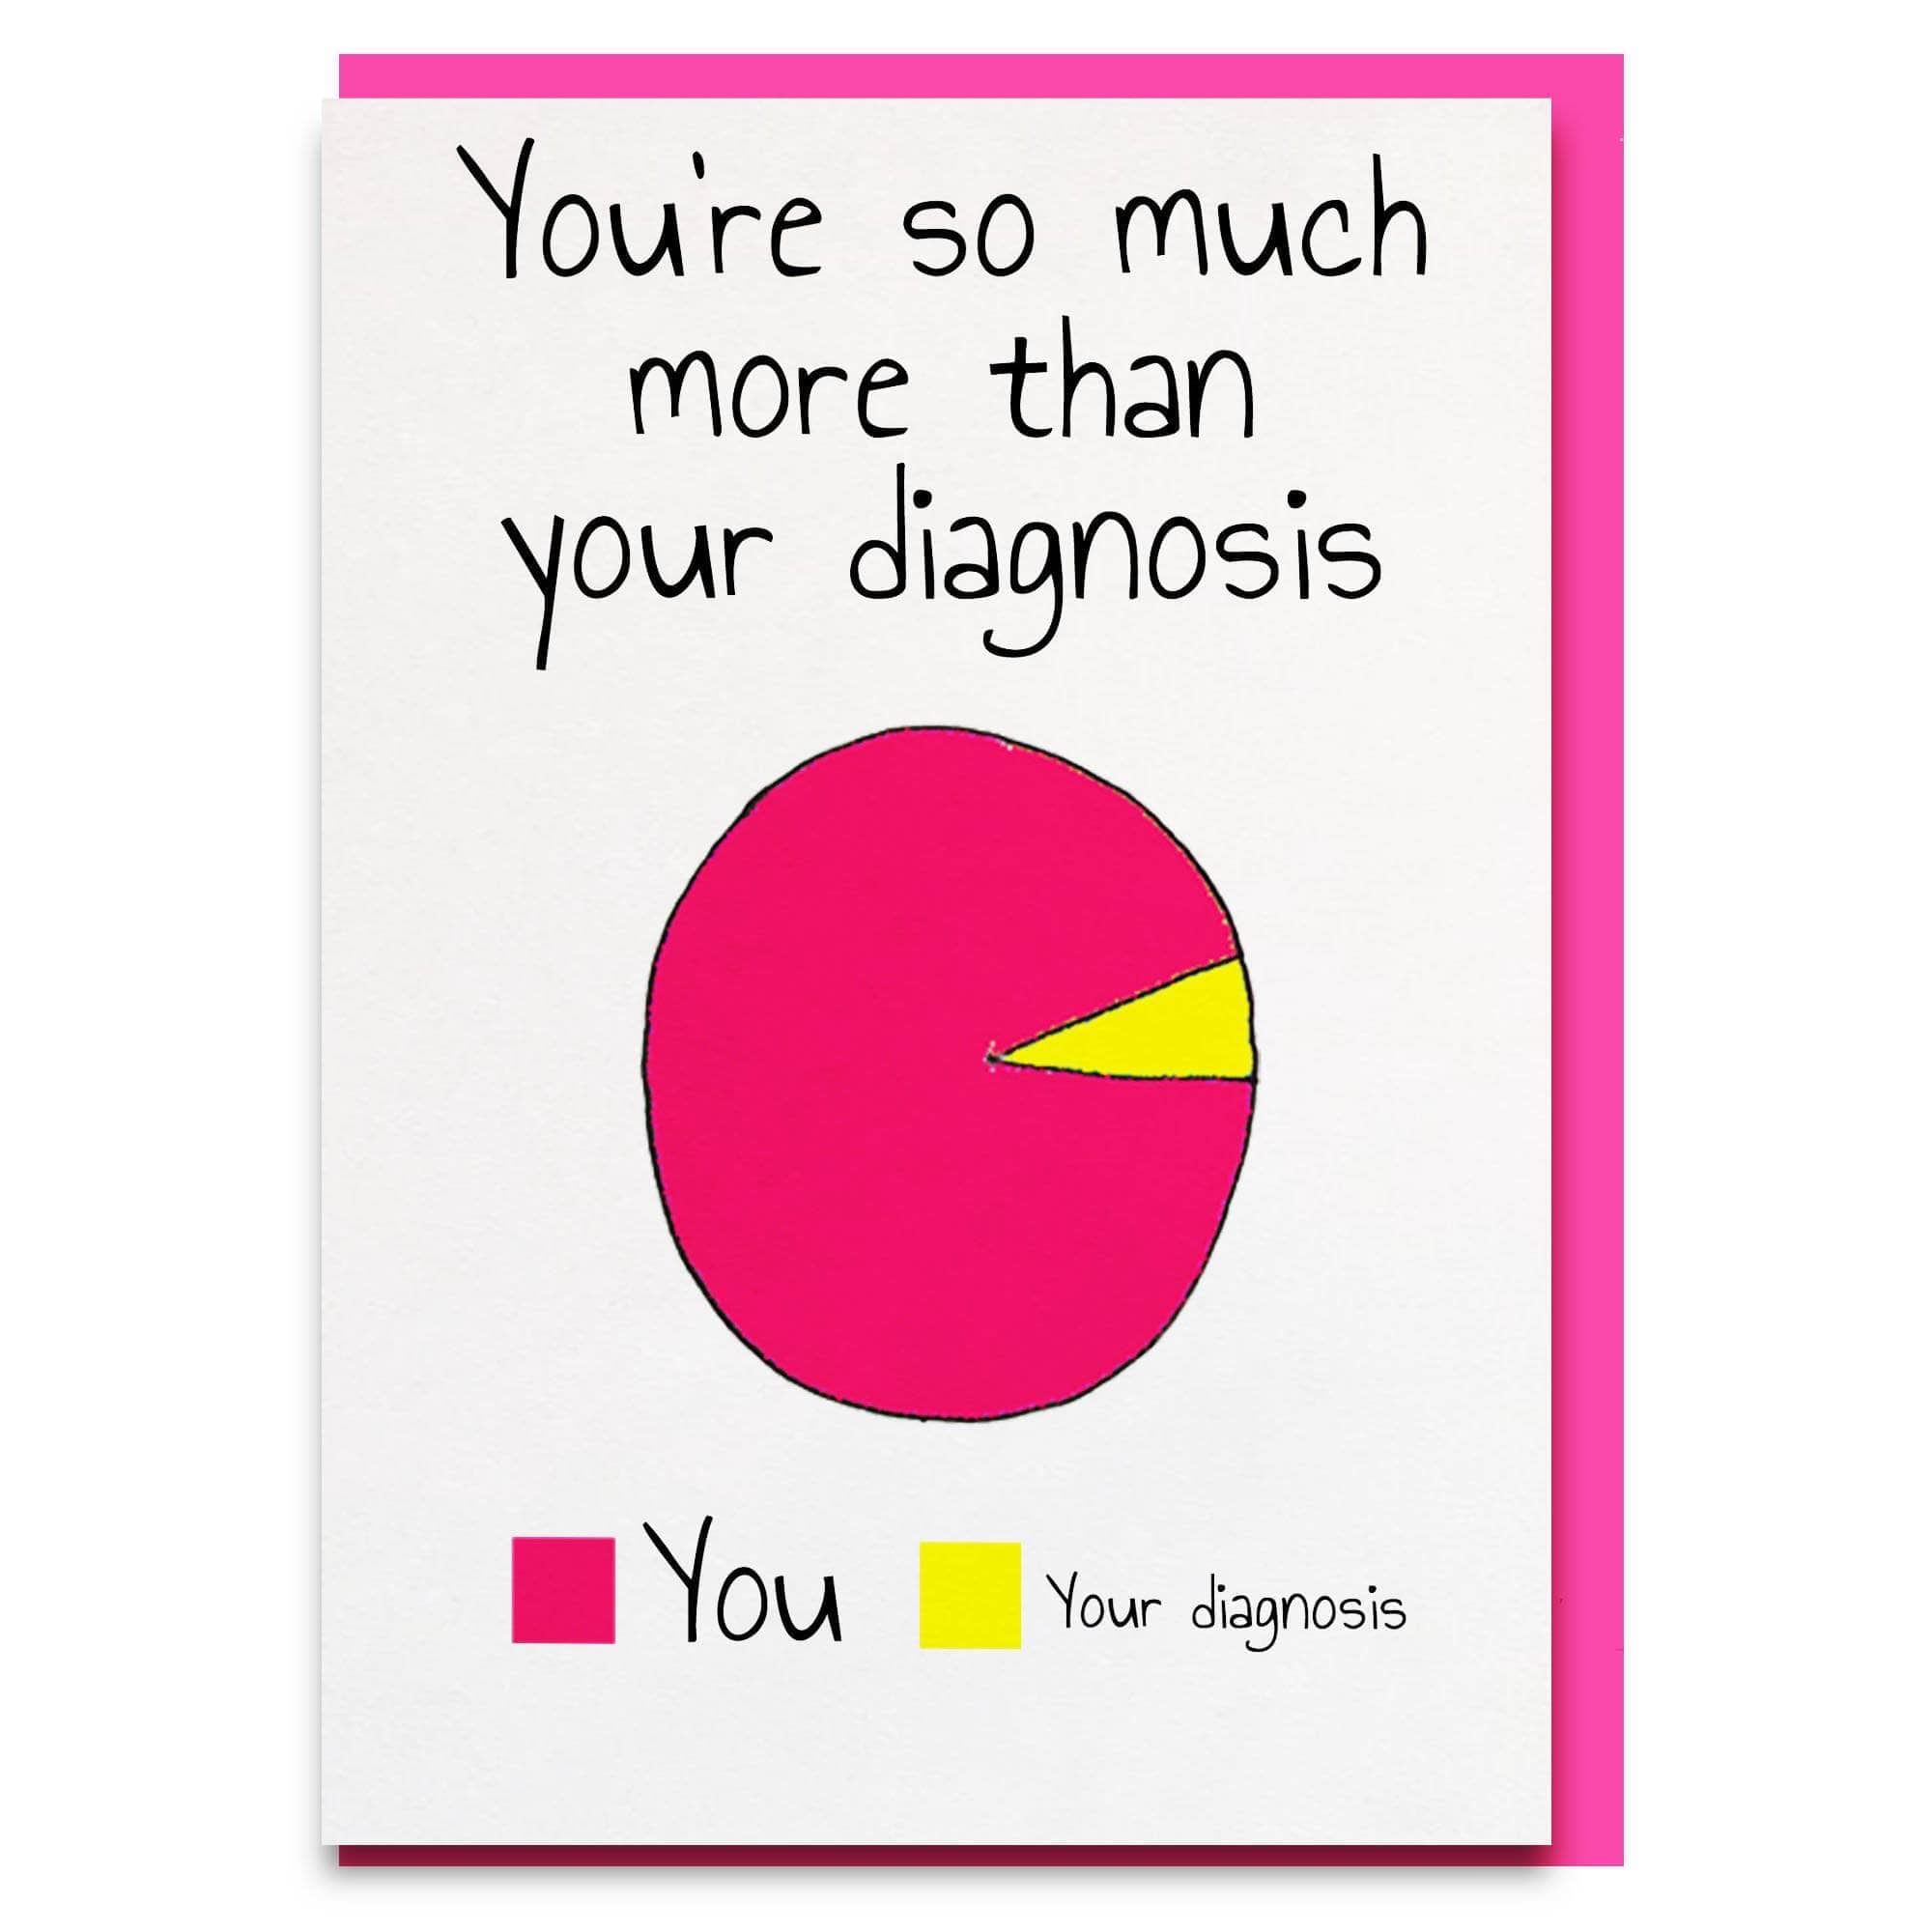 Diagnosis!